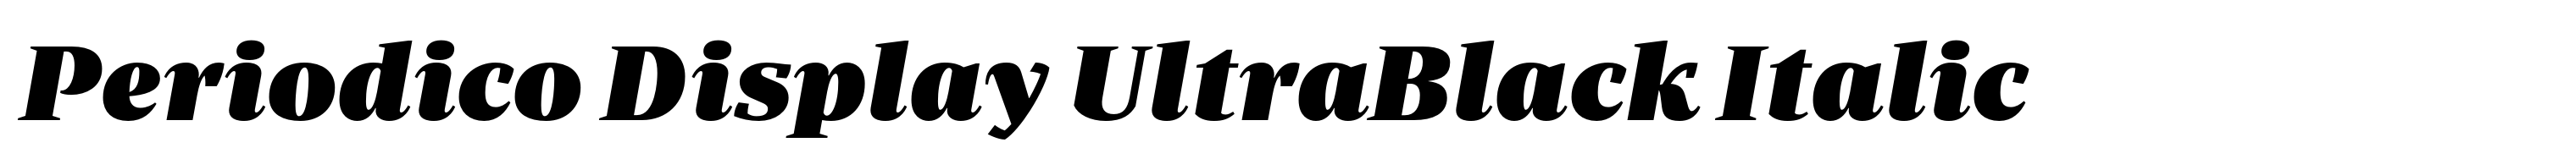 Periodico Display UltraBlack Italic